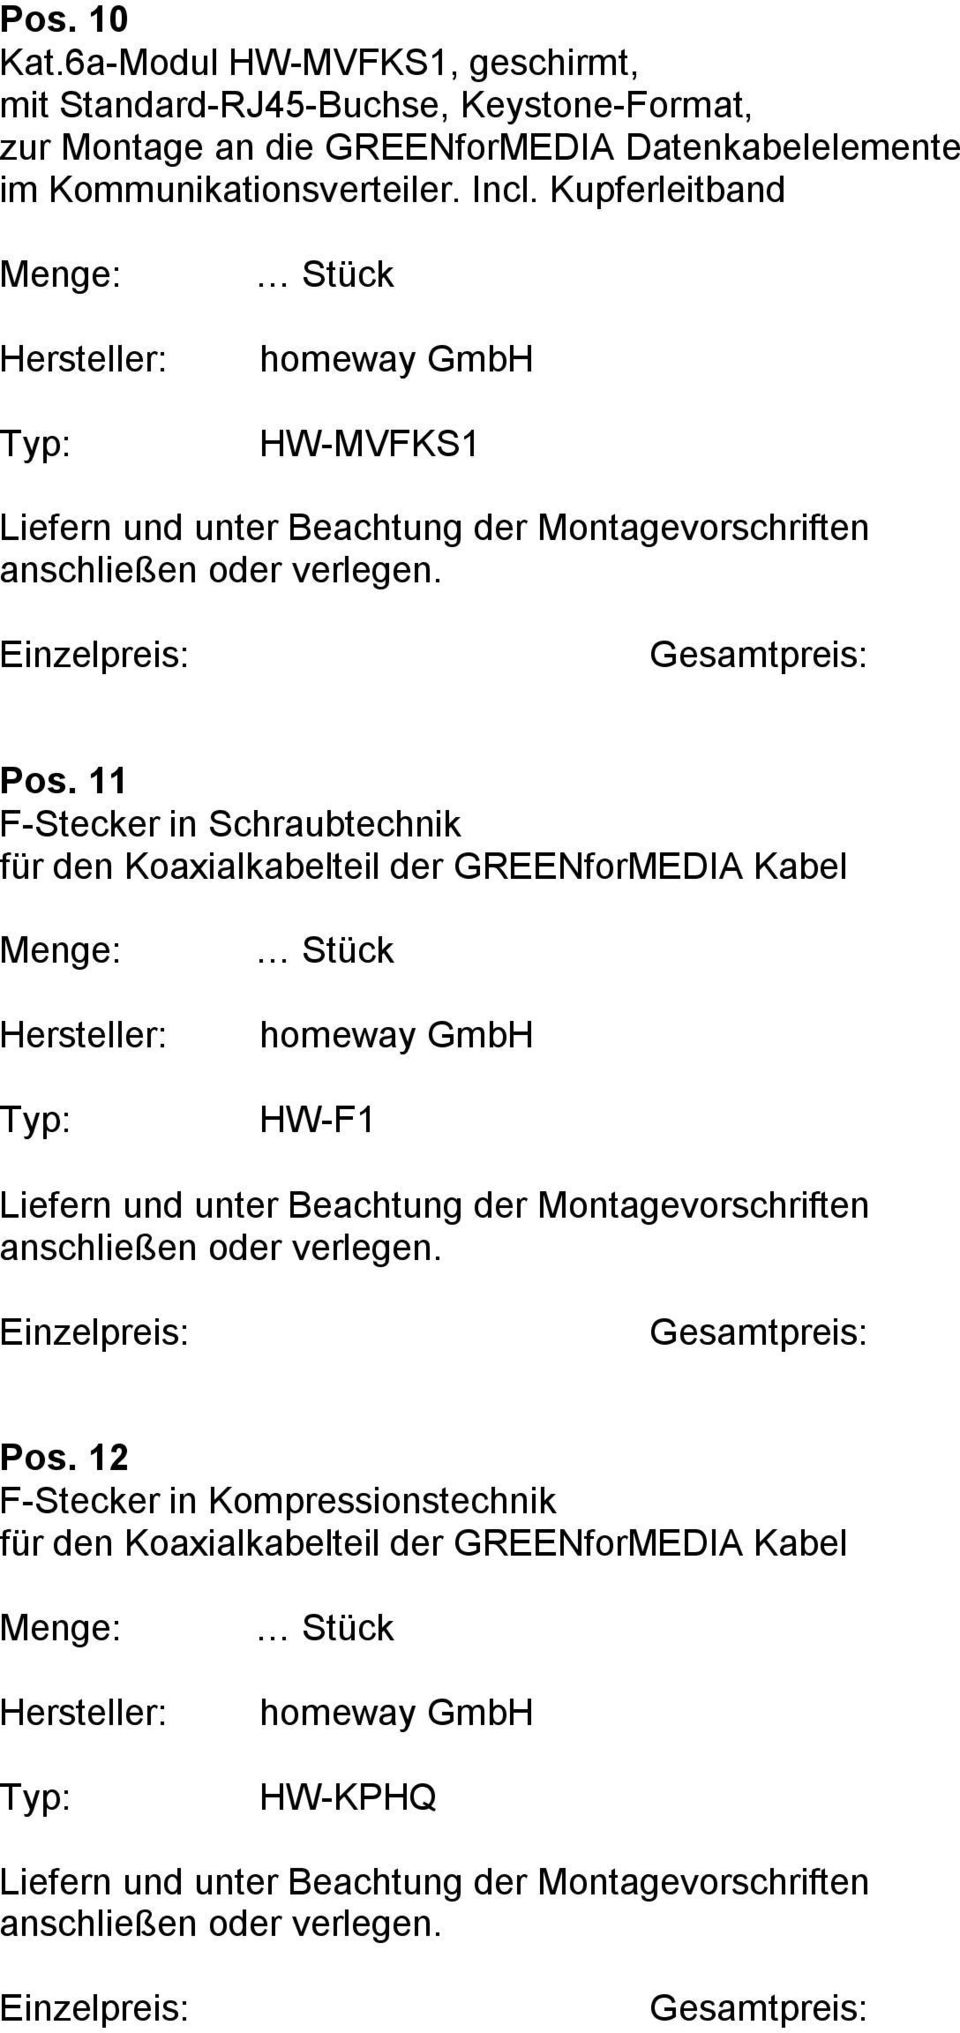 GREENforMEDIA Datenkabelelemente im Kommunikationsverteiler. Incl. Kupferleitband HW-MVFKS1 Pos.